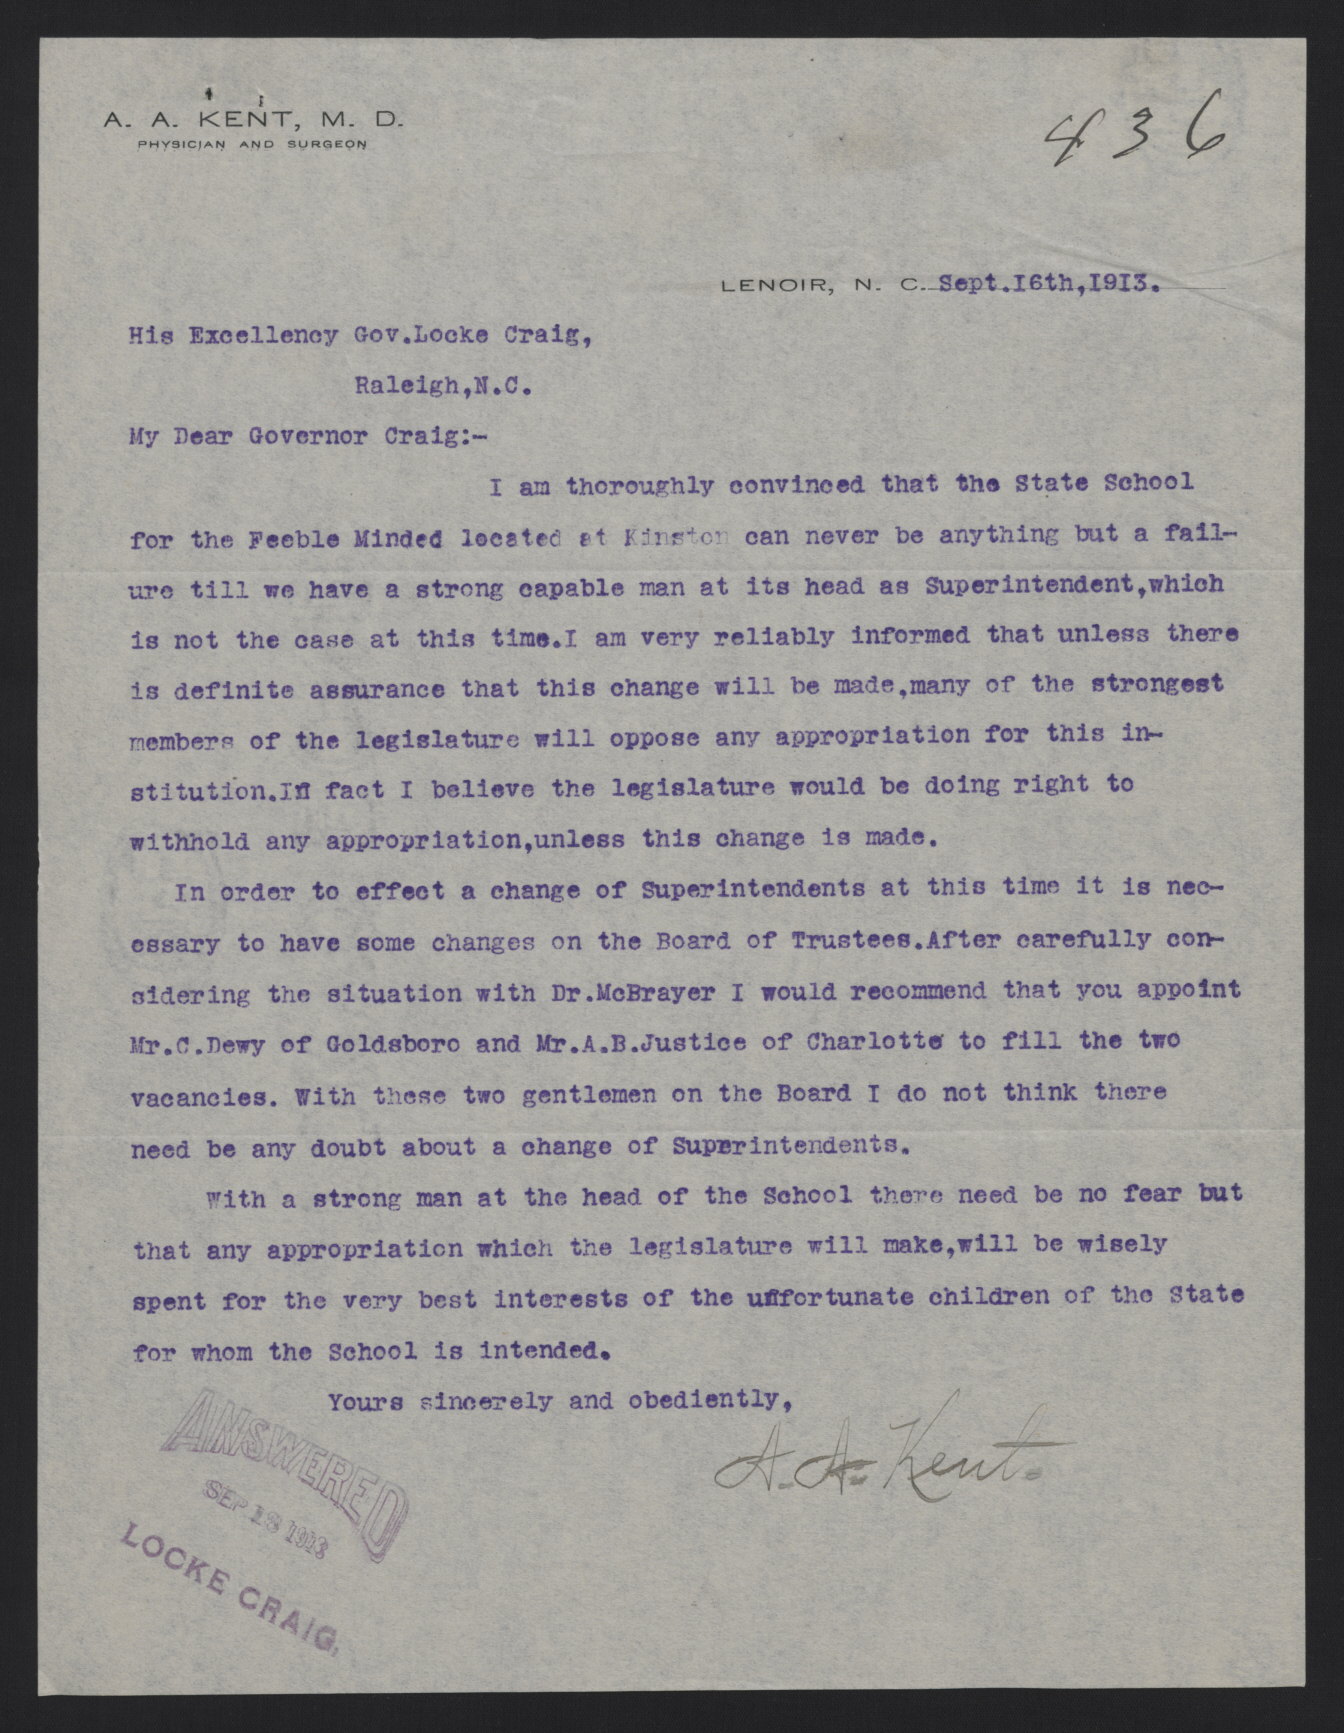 Letter from Kent to Craig, September 16, 1913